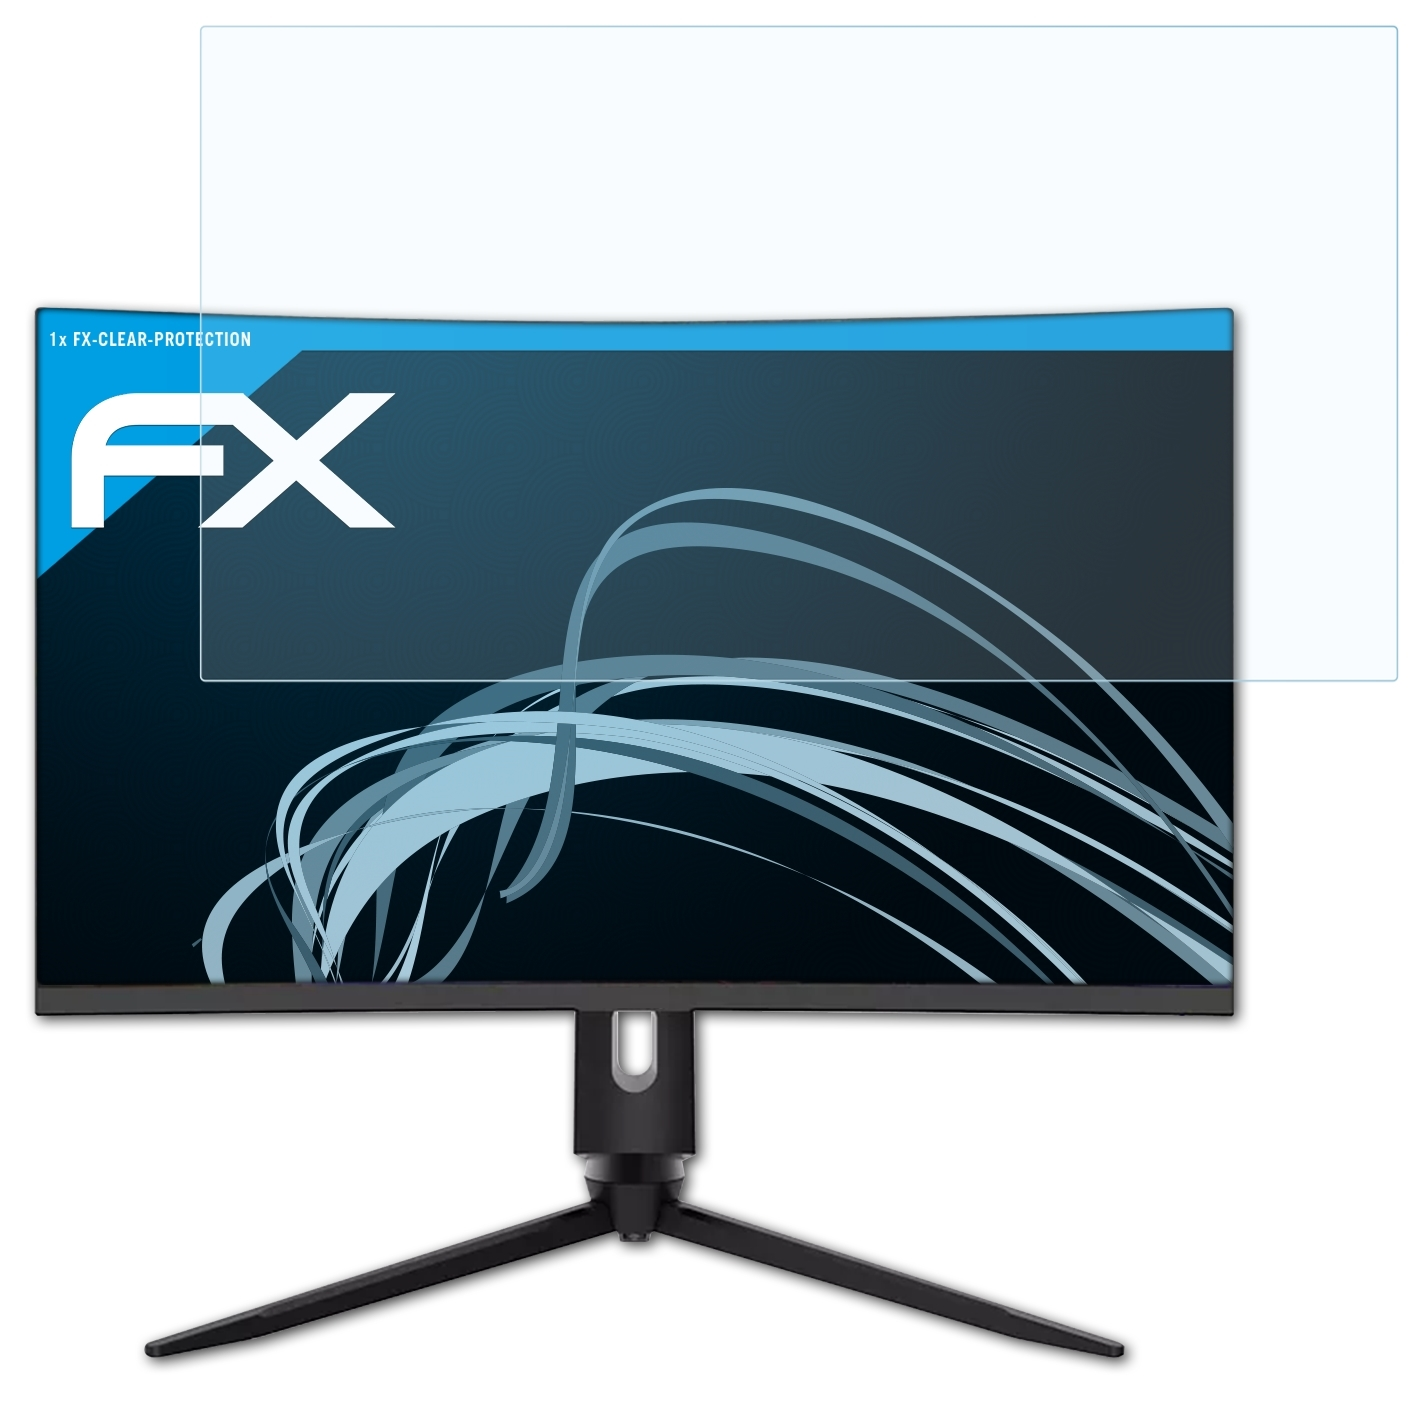 ATFOLIX FX-Clear Displayschutz(für Peaq G270) PMO